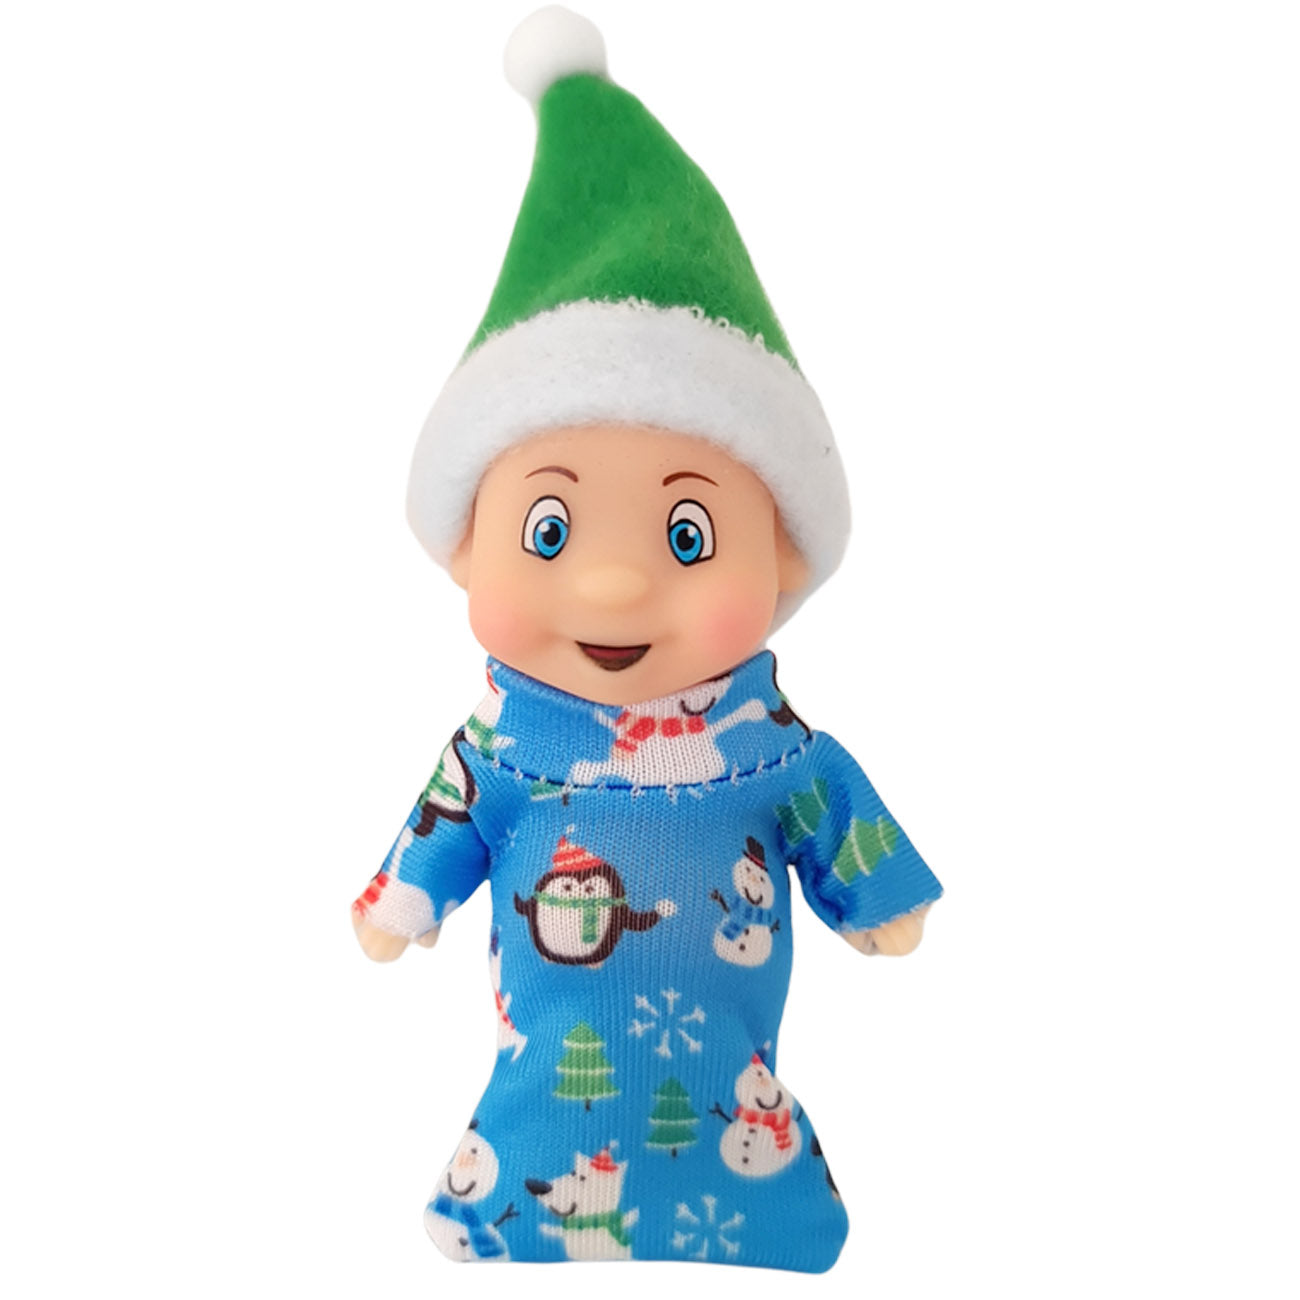 Elf Baby pyjama outfit